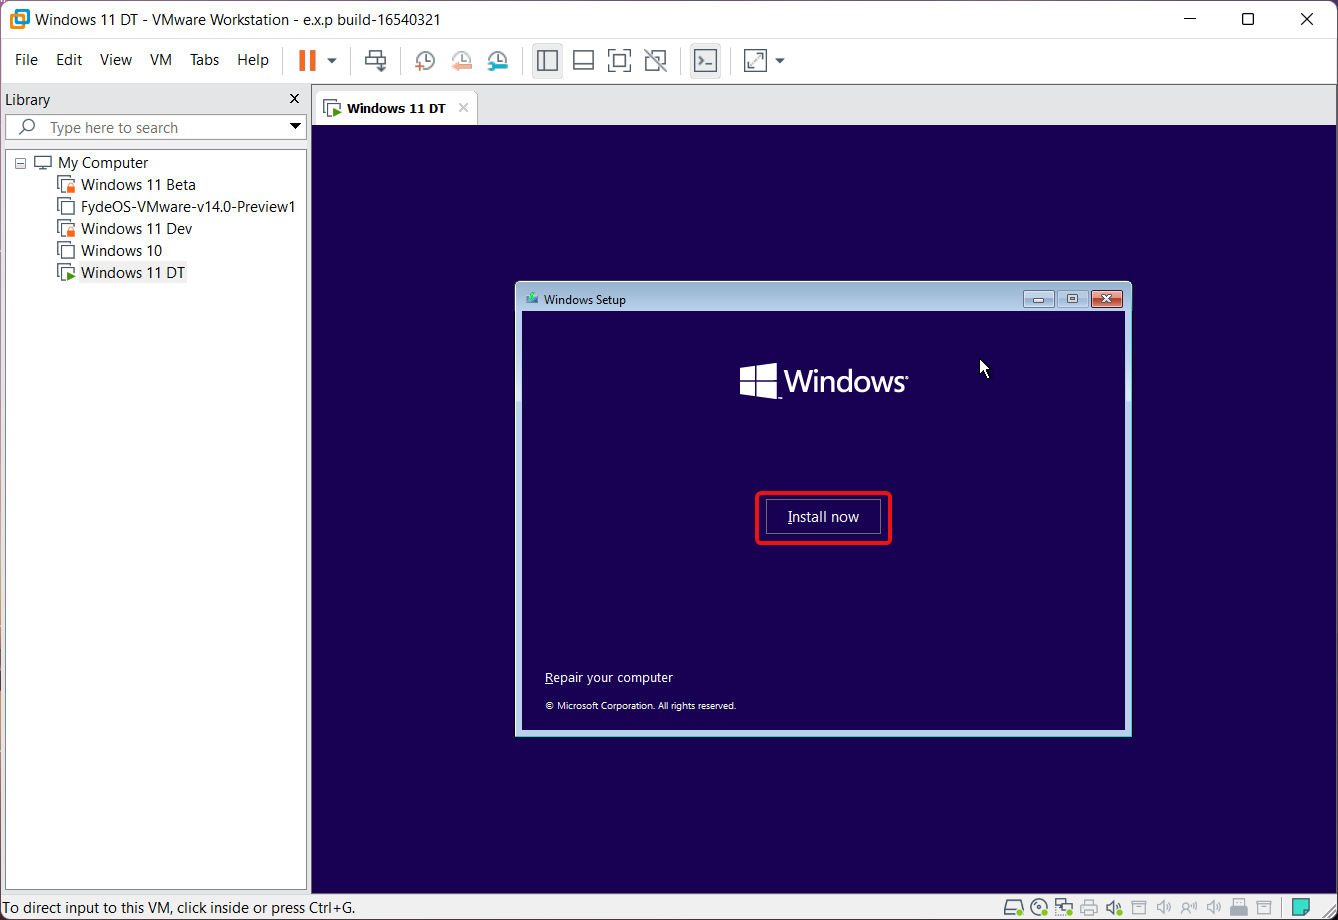 How to Install Windows 11 on VMWare Virtual Machine - 19